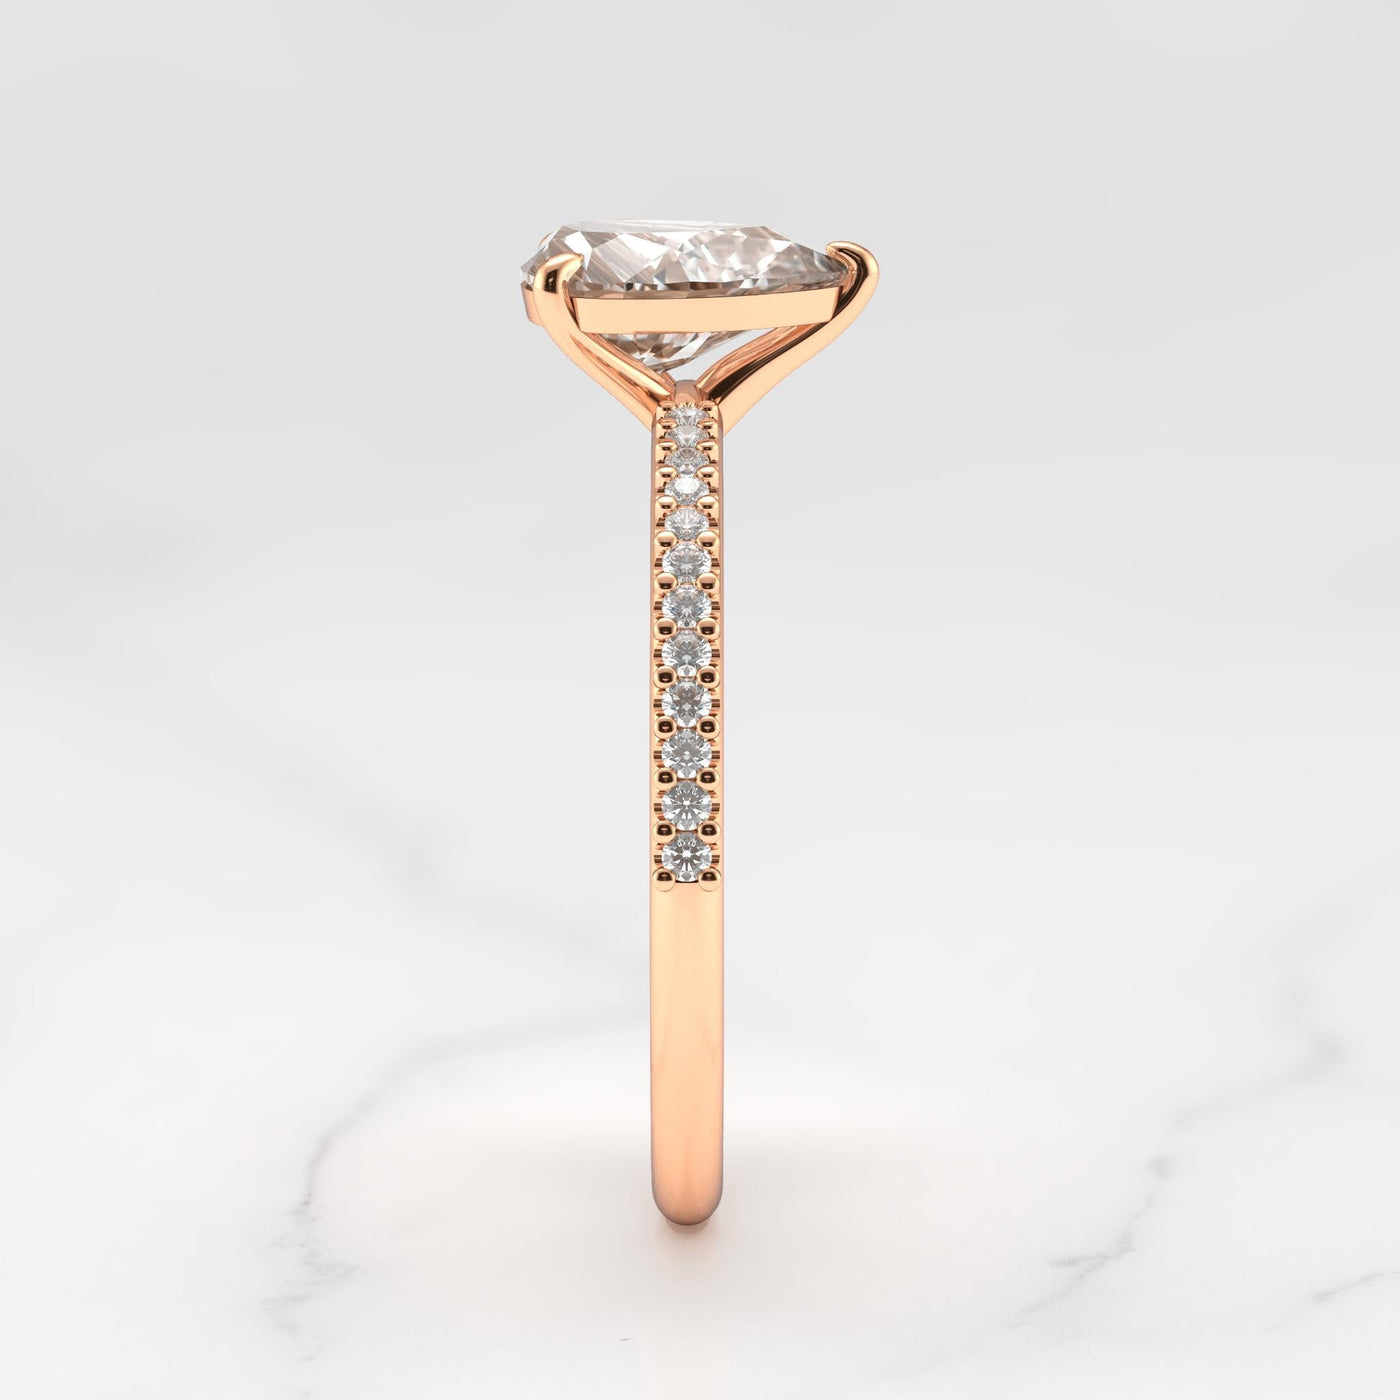 Pear-shaped half pave diamond ring